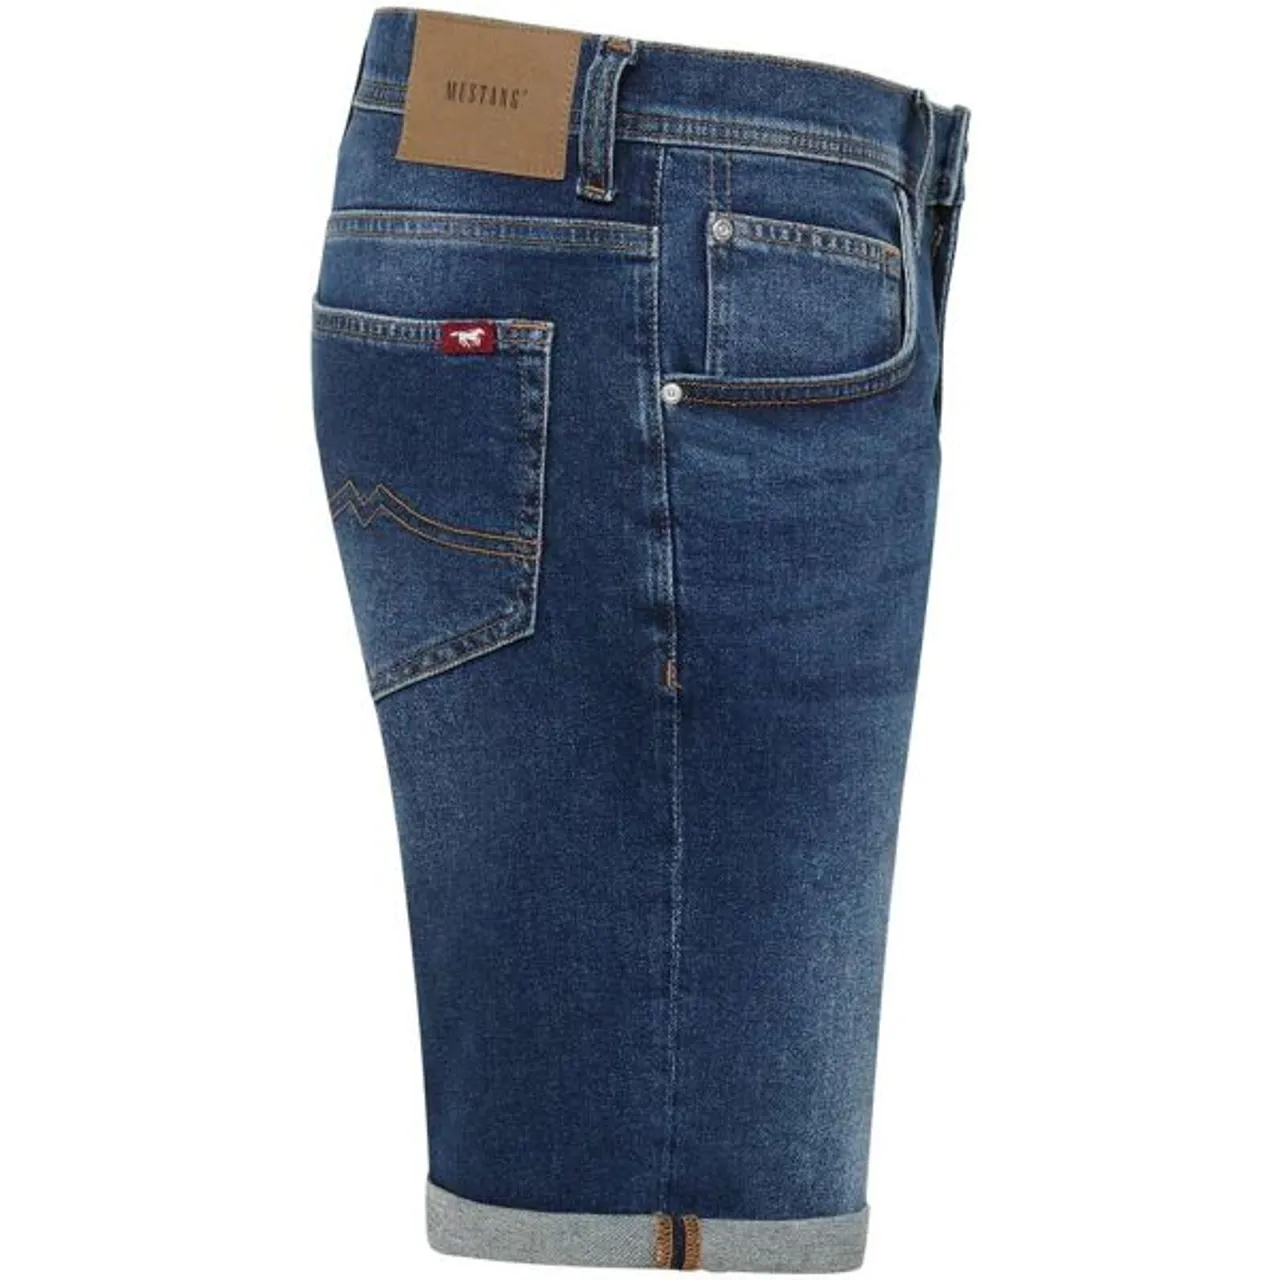 Jeansshorts MUSTANG "Style Chicago Shorts Z" Gr. 31, Normalgrößen, blau (blue used) Herren Jeans Shorts